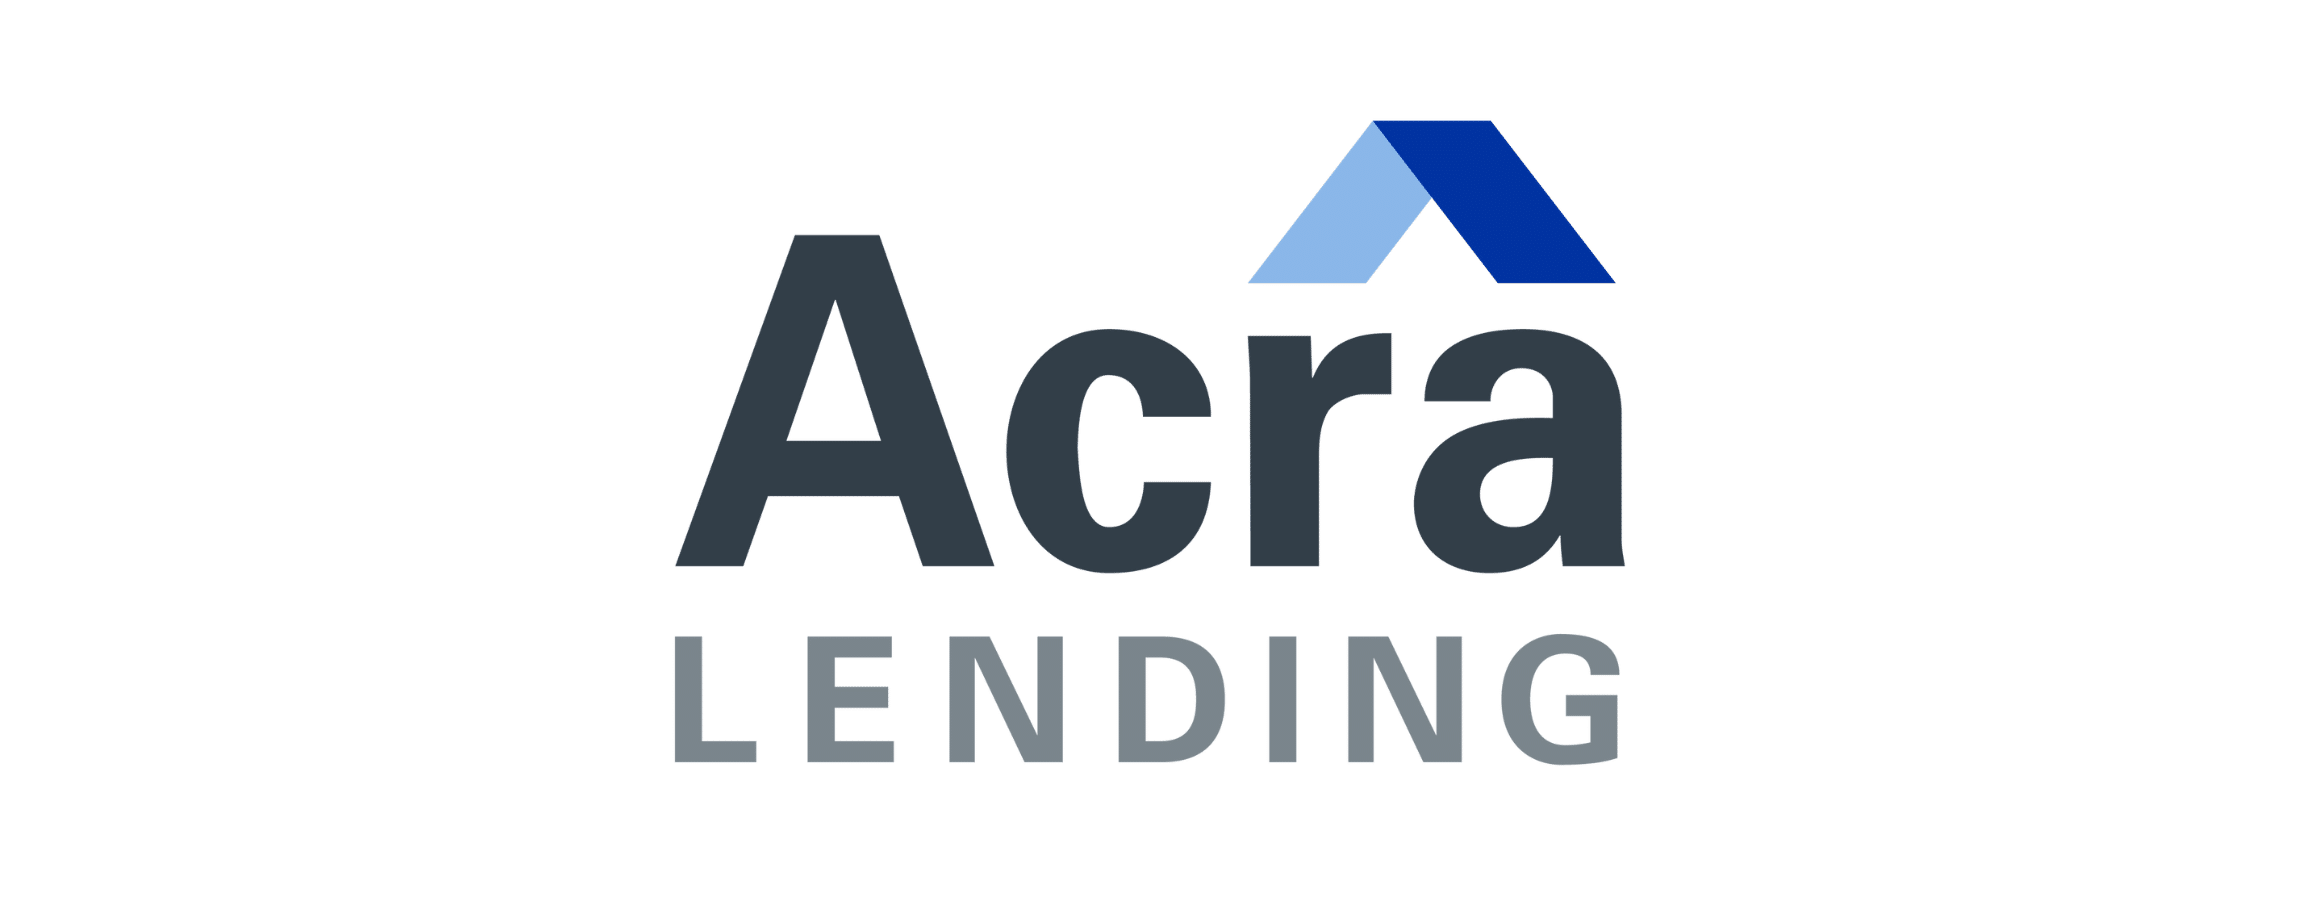 Acra Lending